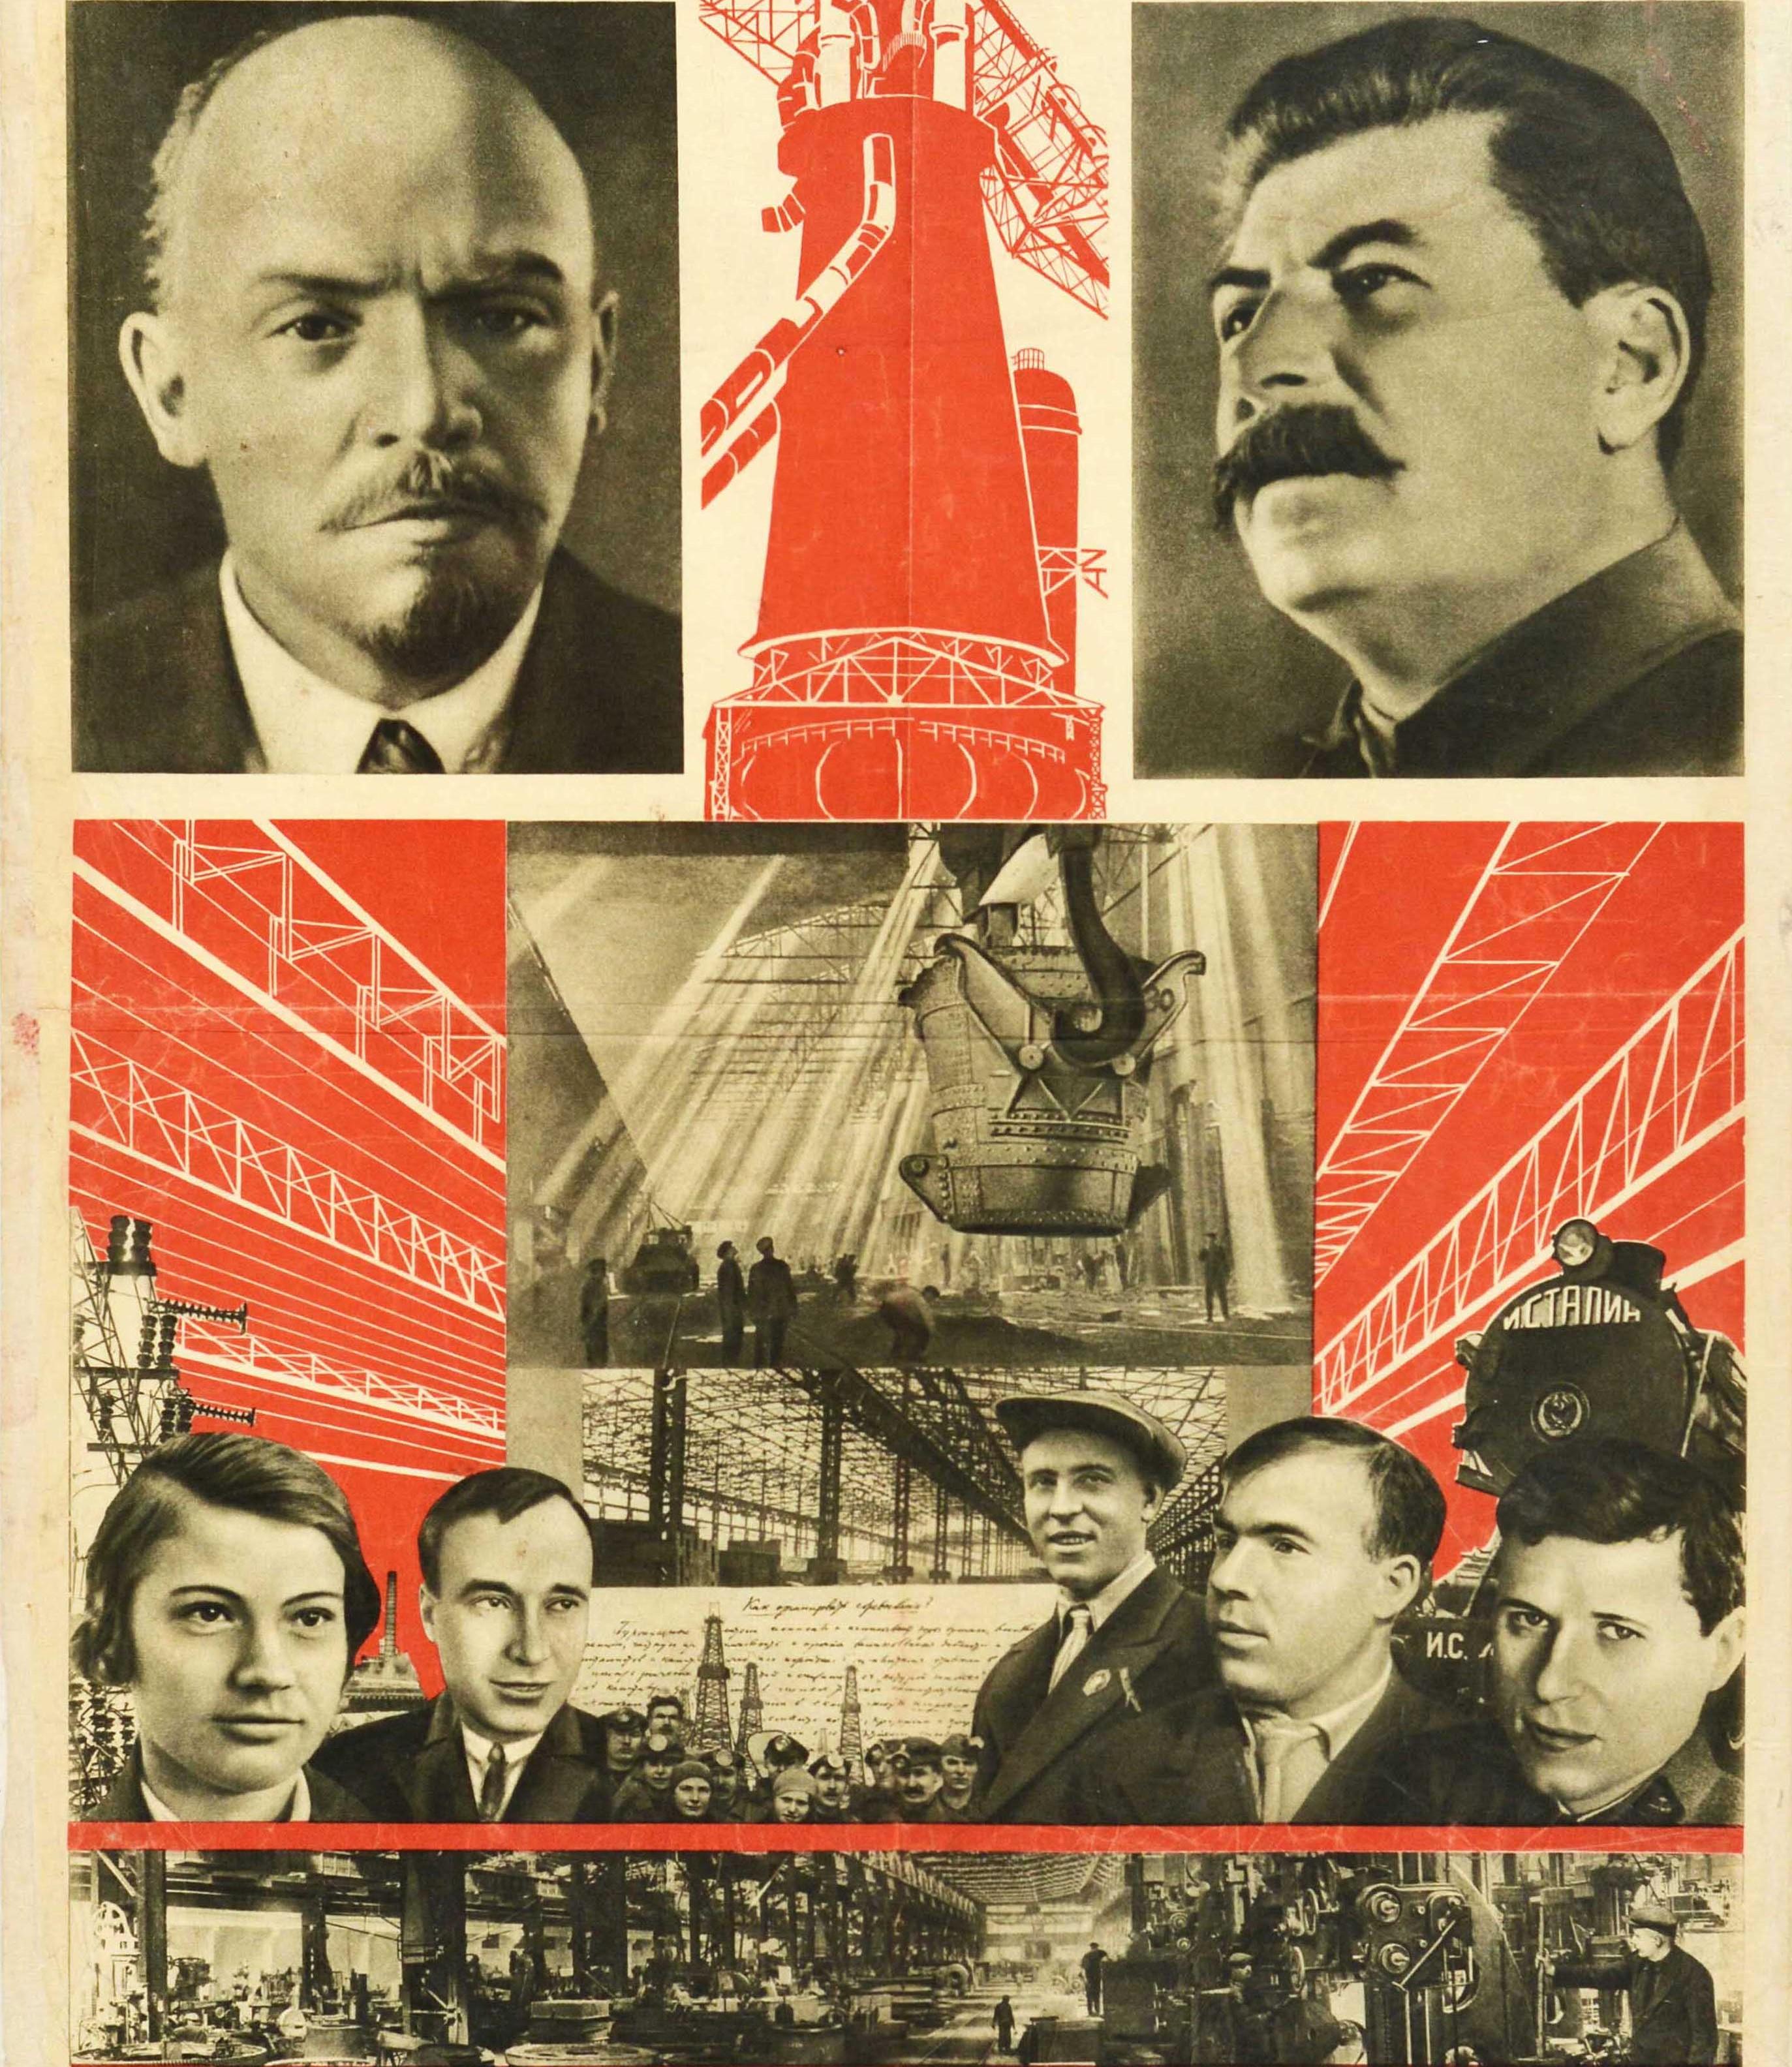 Originales Original-Vintage- Propaganda-Poster, sozialistische Industrie, UdSSR, Lenin Stalin, Fabrik (Orange), Print, von D. Moor